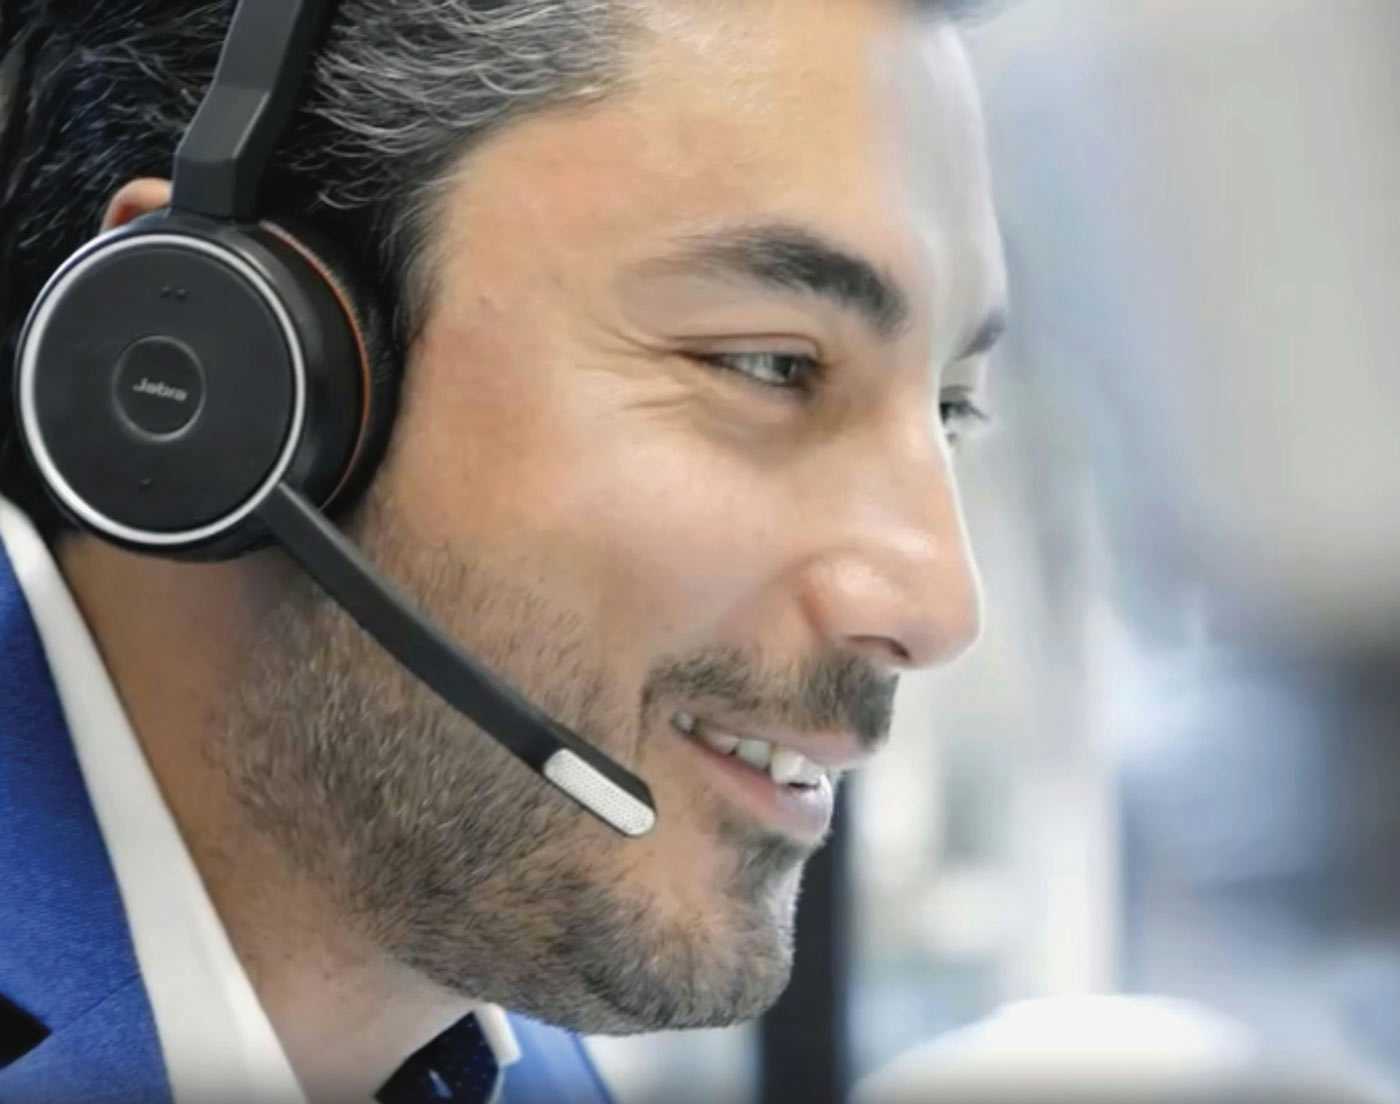 Customer support representative on headset